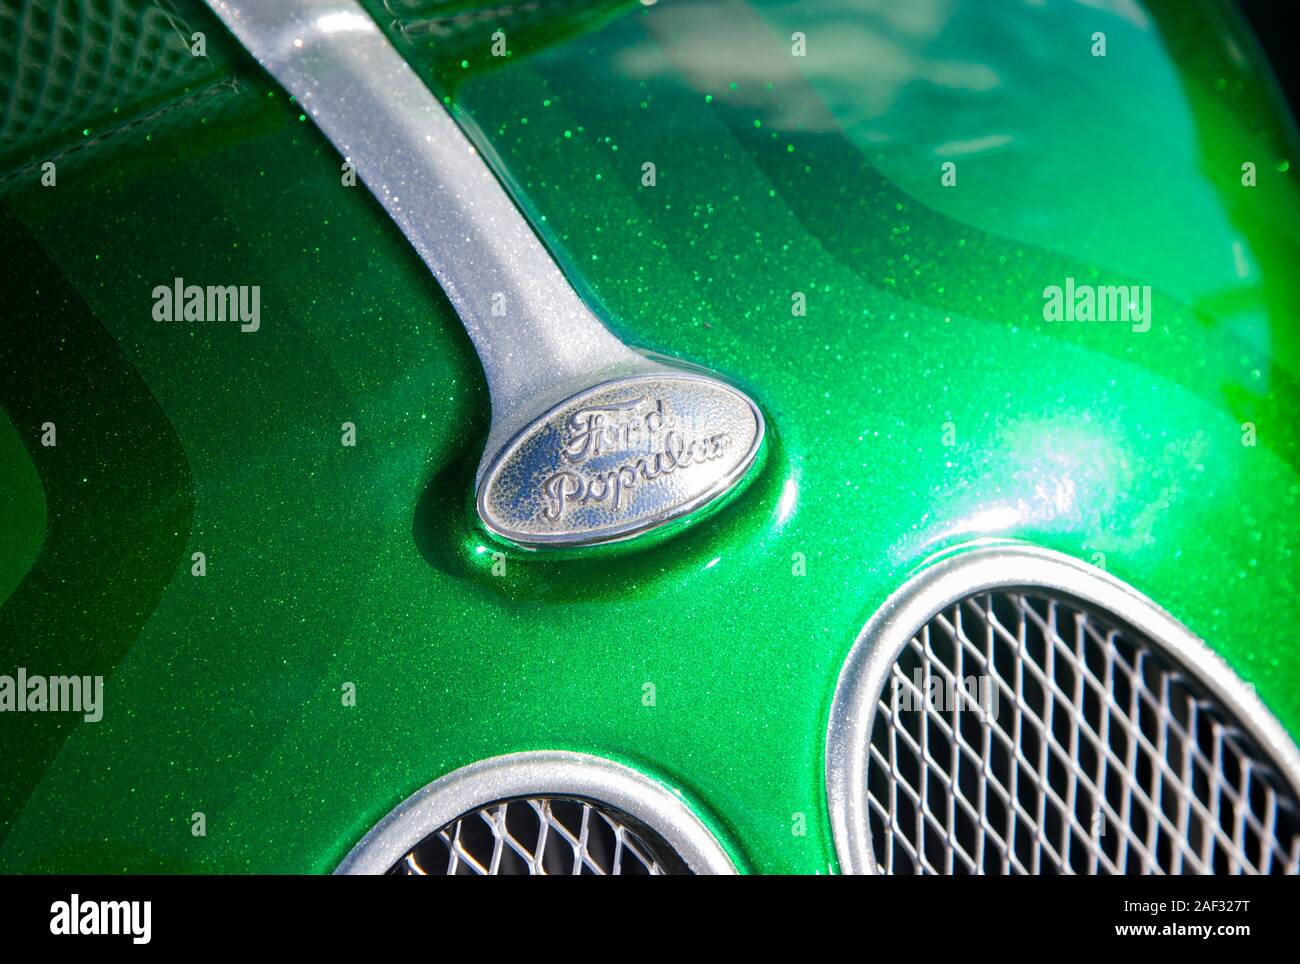 1955 Ford hot rod dragster Pop Banque D'Images